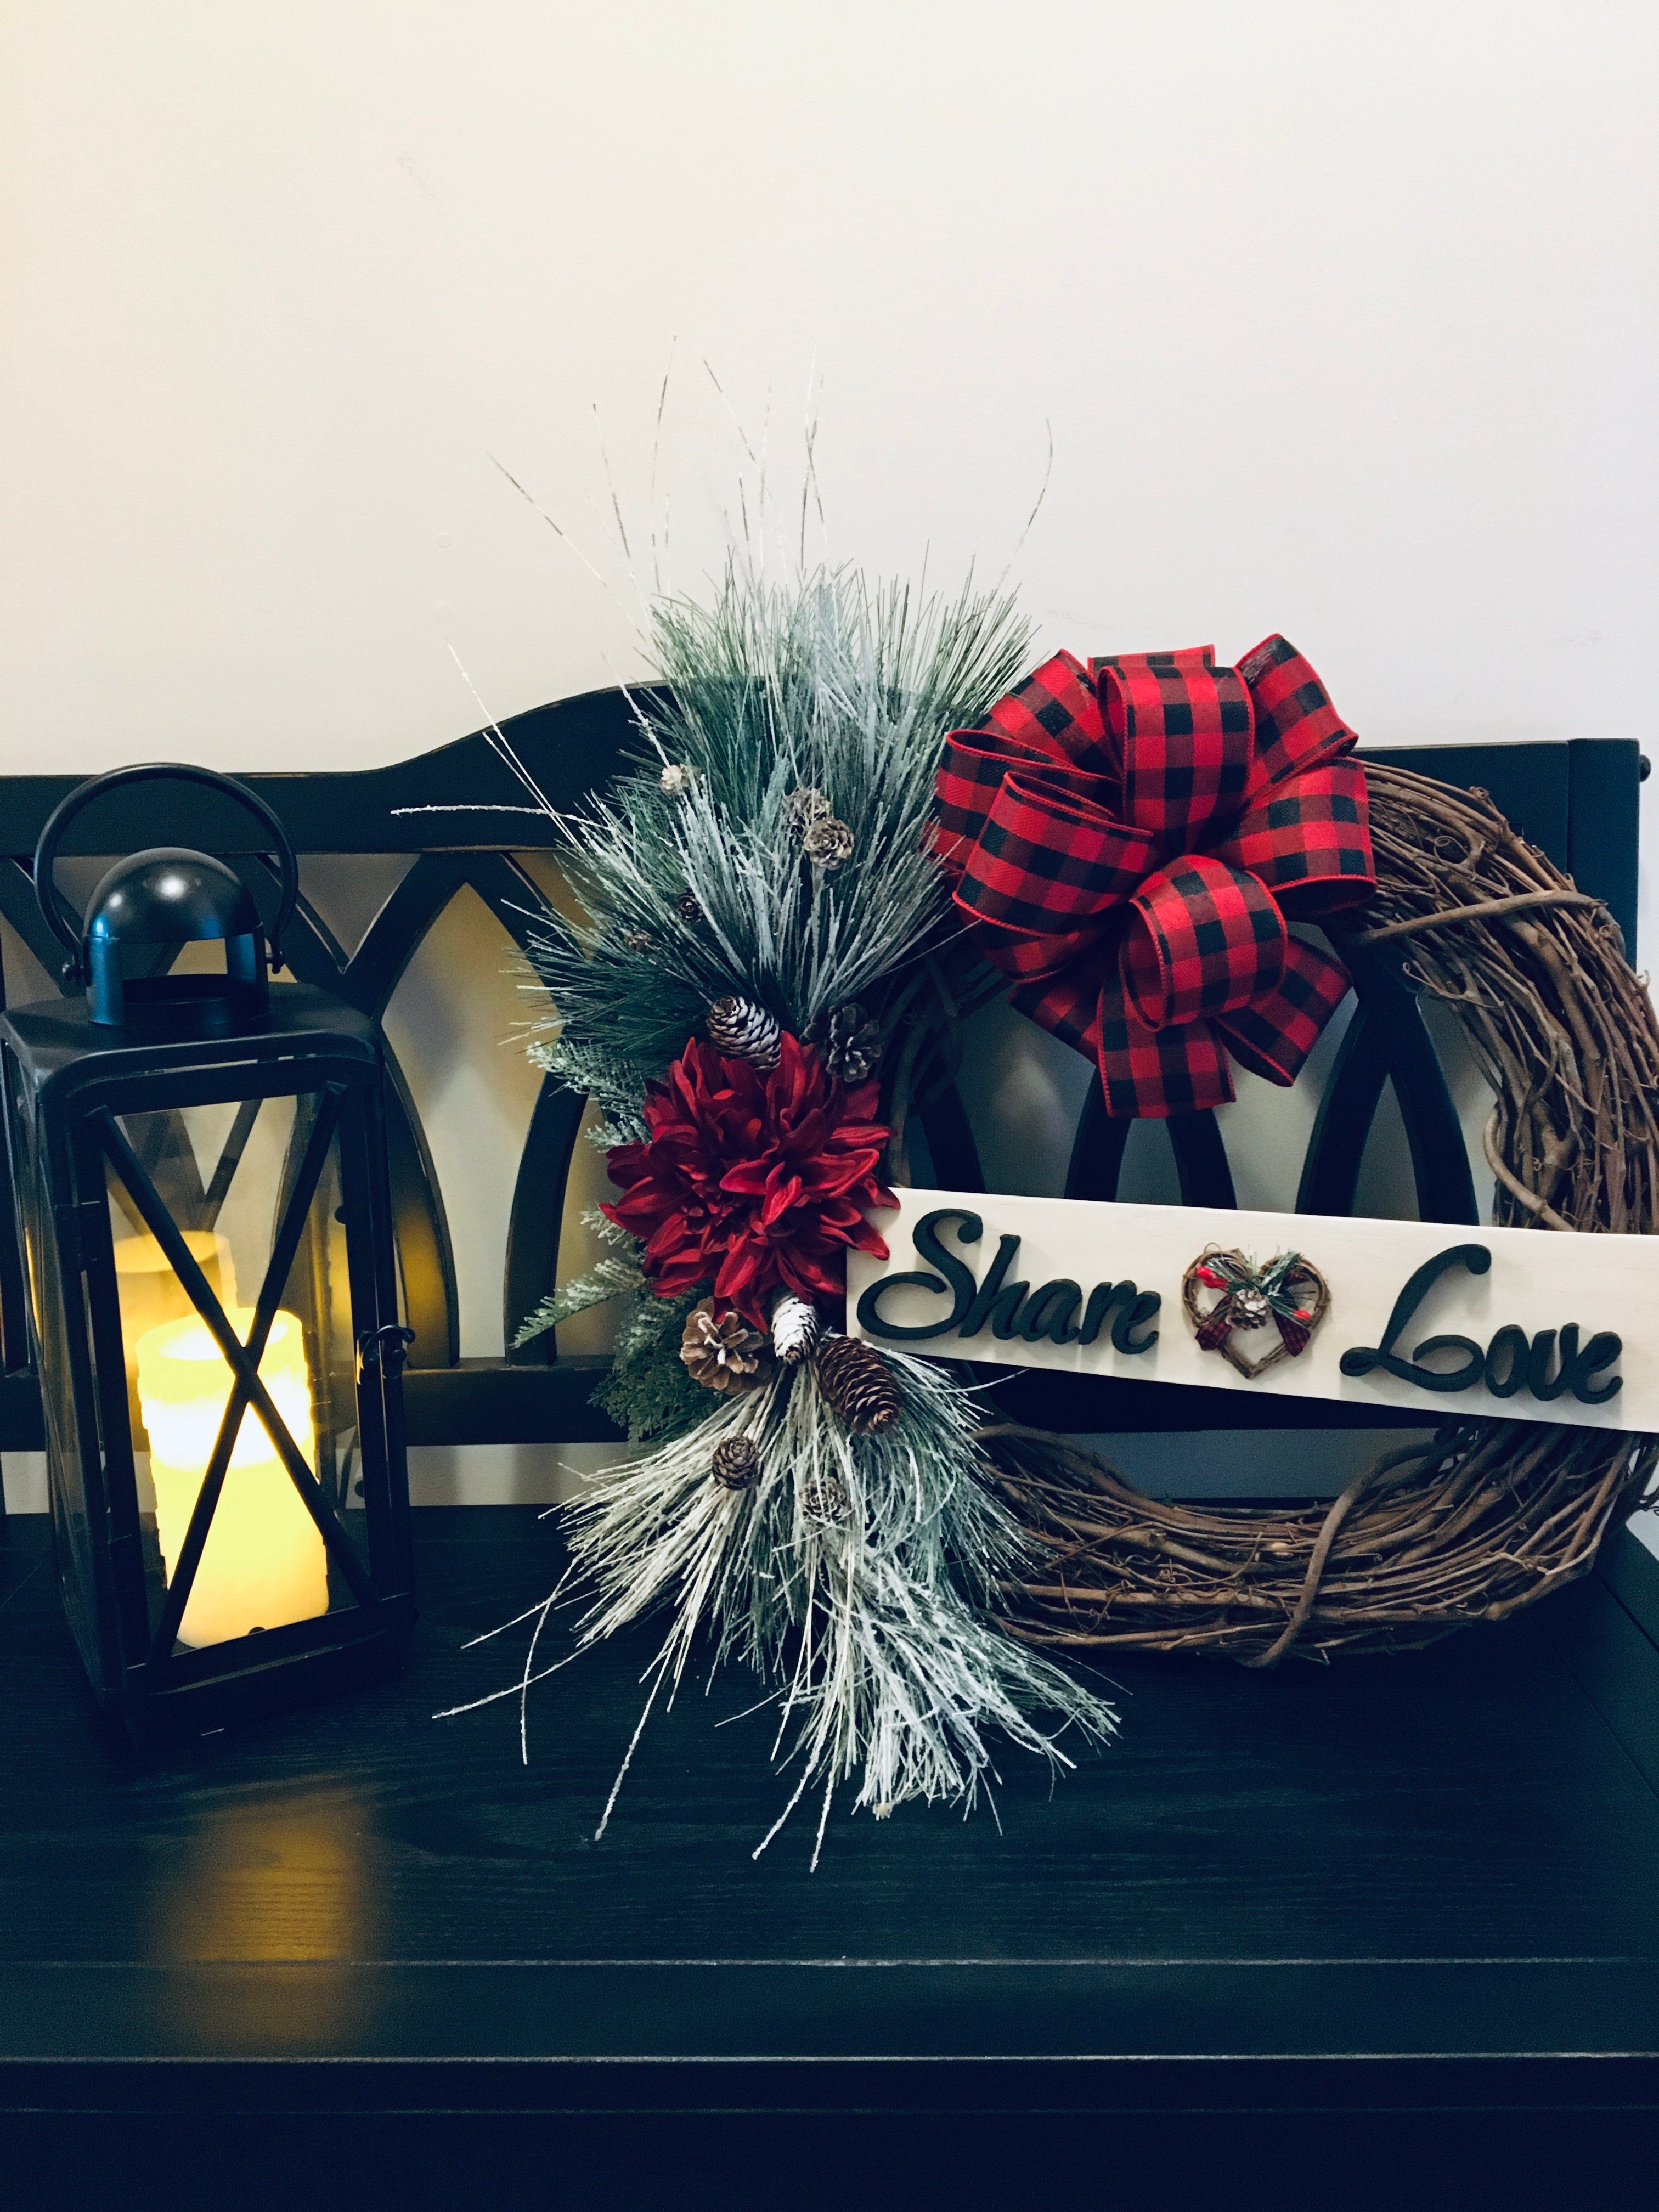 Share Love Christian Winter Holiday Grapevine Wreath, Valentine's Day Grapevine Wreath